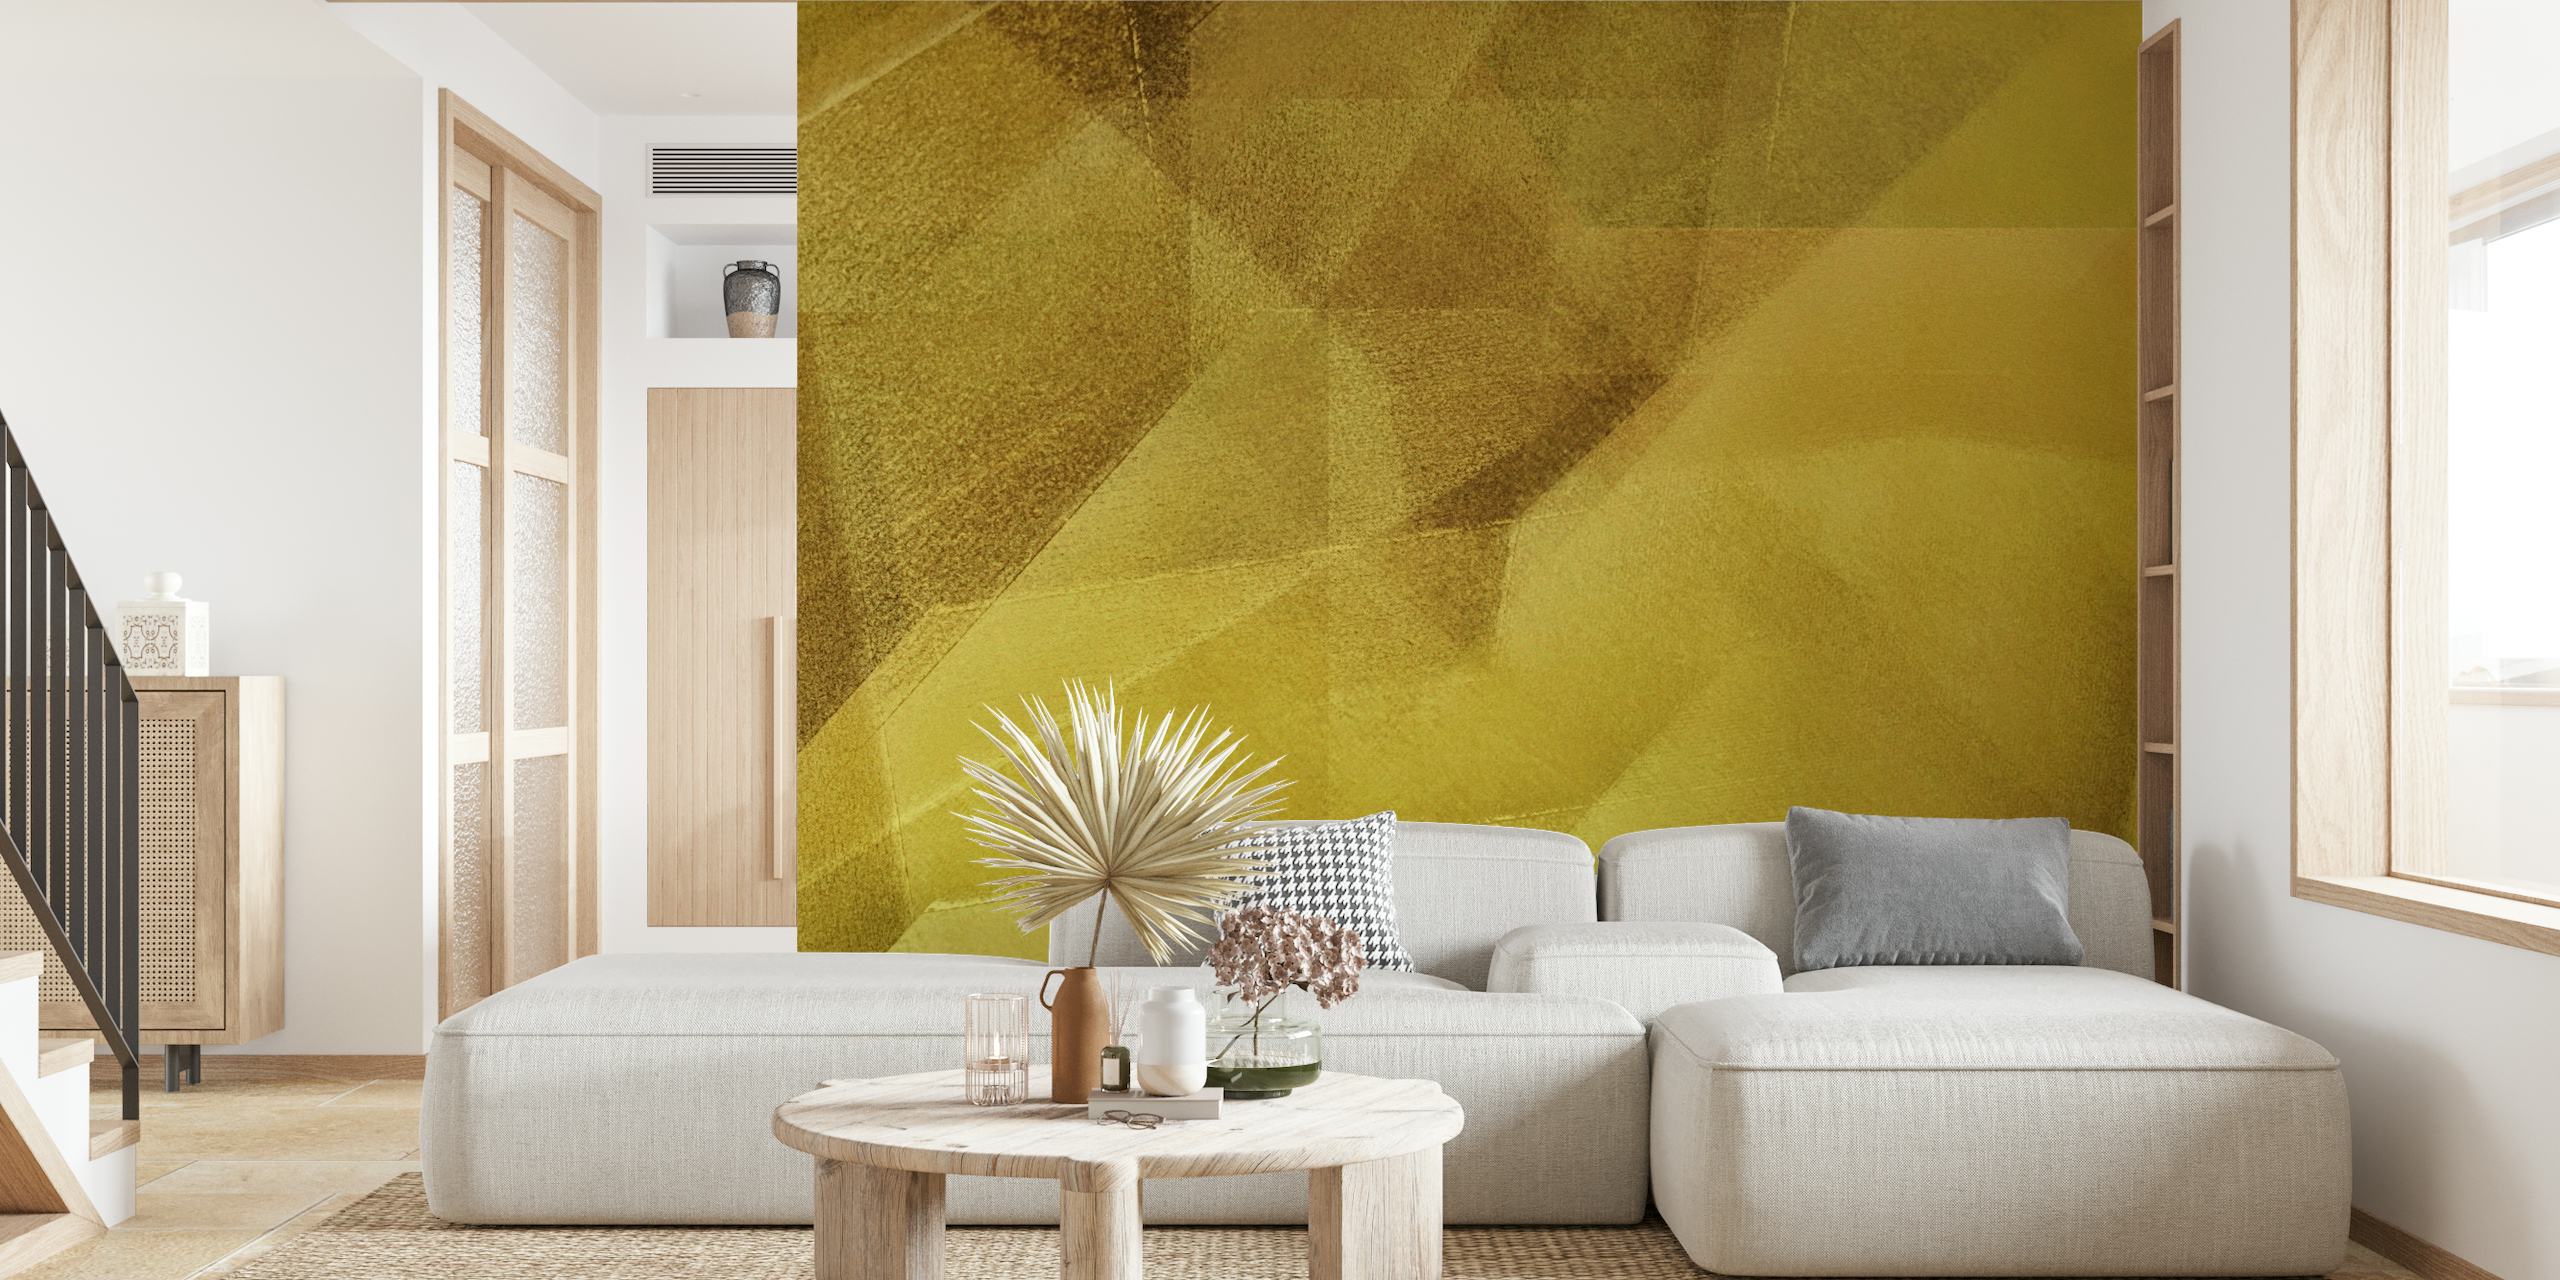 Fotomural geométrico en tonos dorados con motivos abstractos para un diseño interior sofisticado